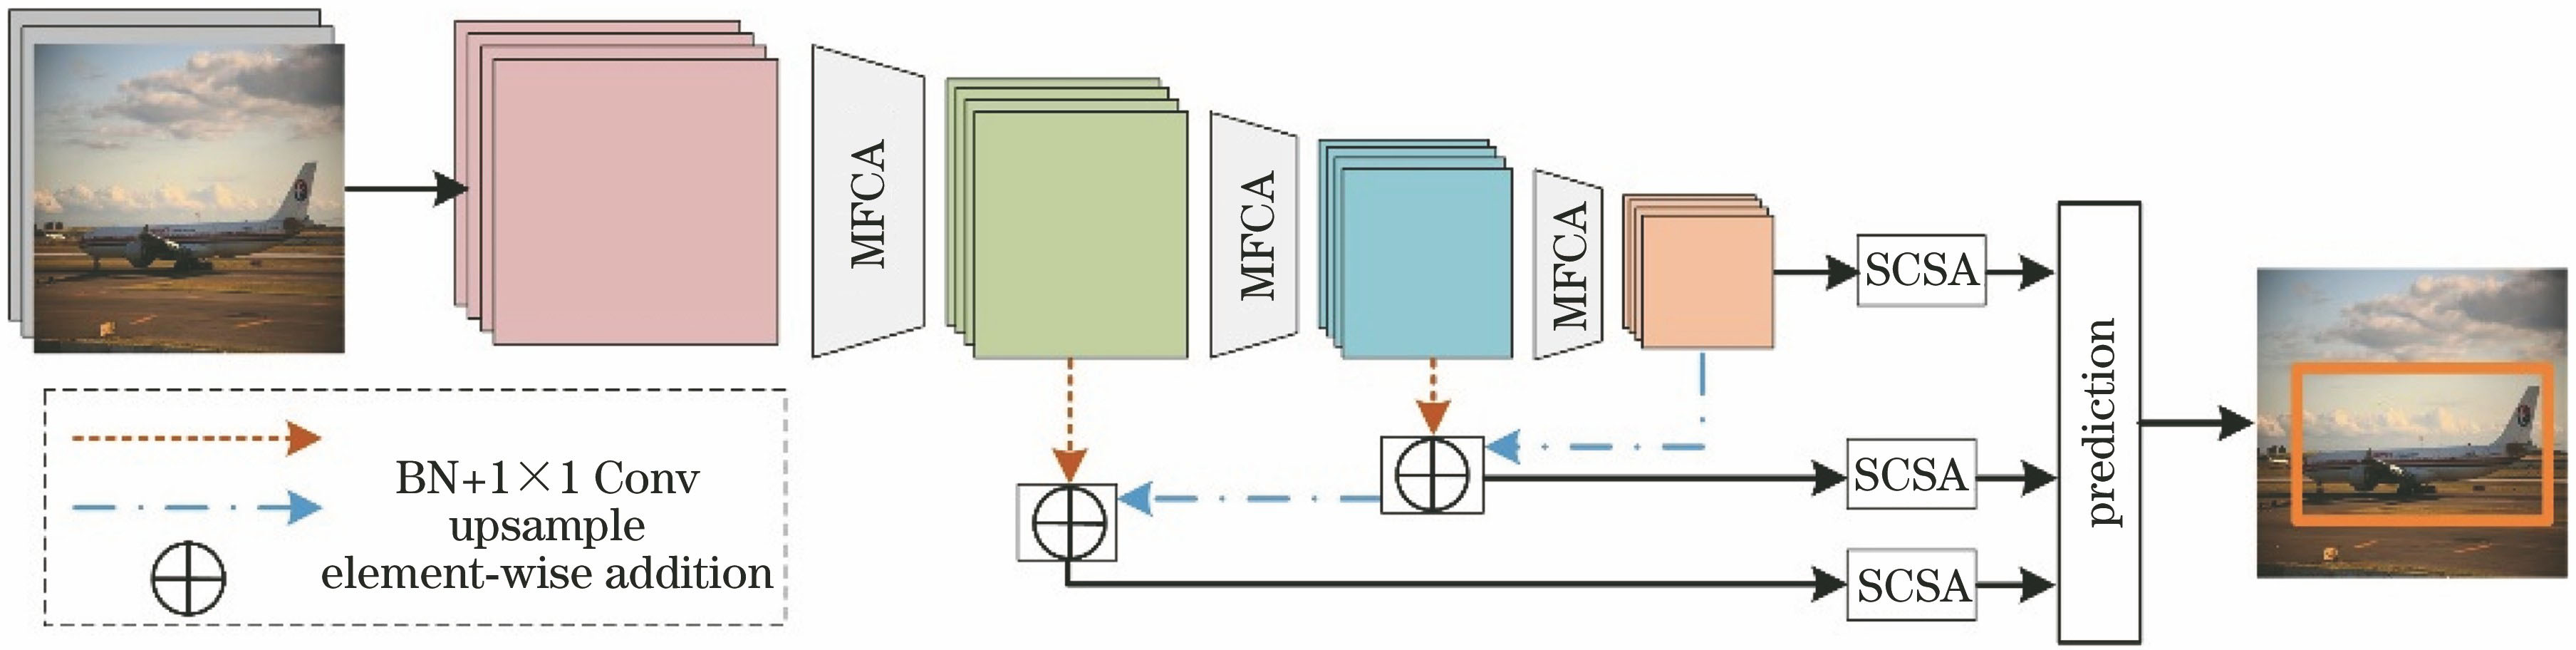 Architecture of the proposed DAGM model